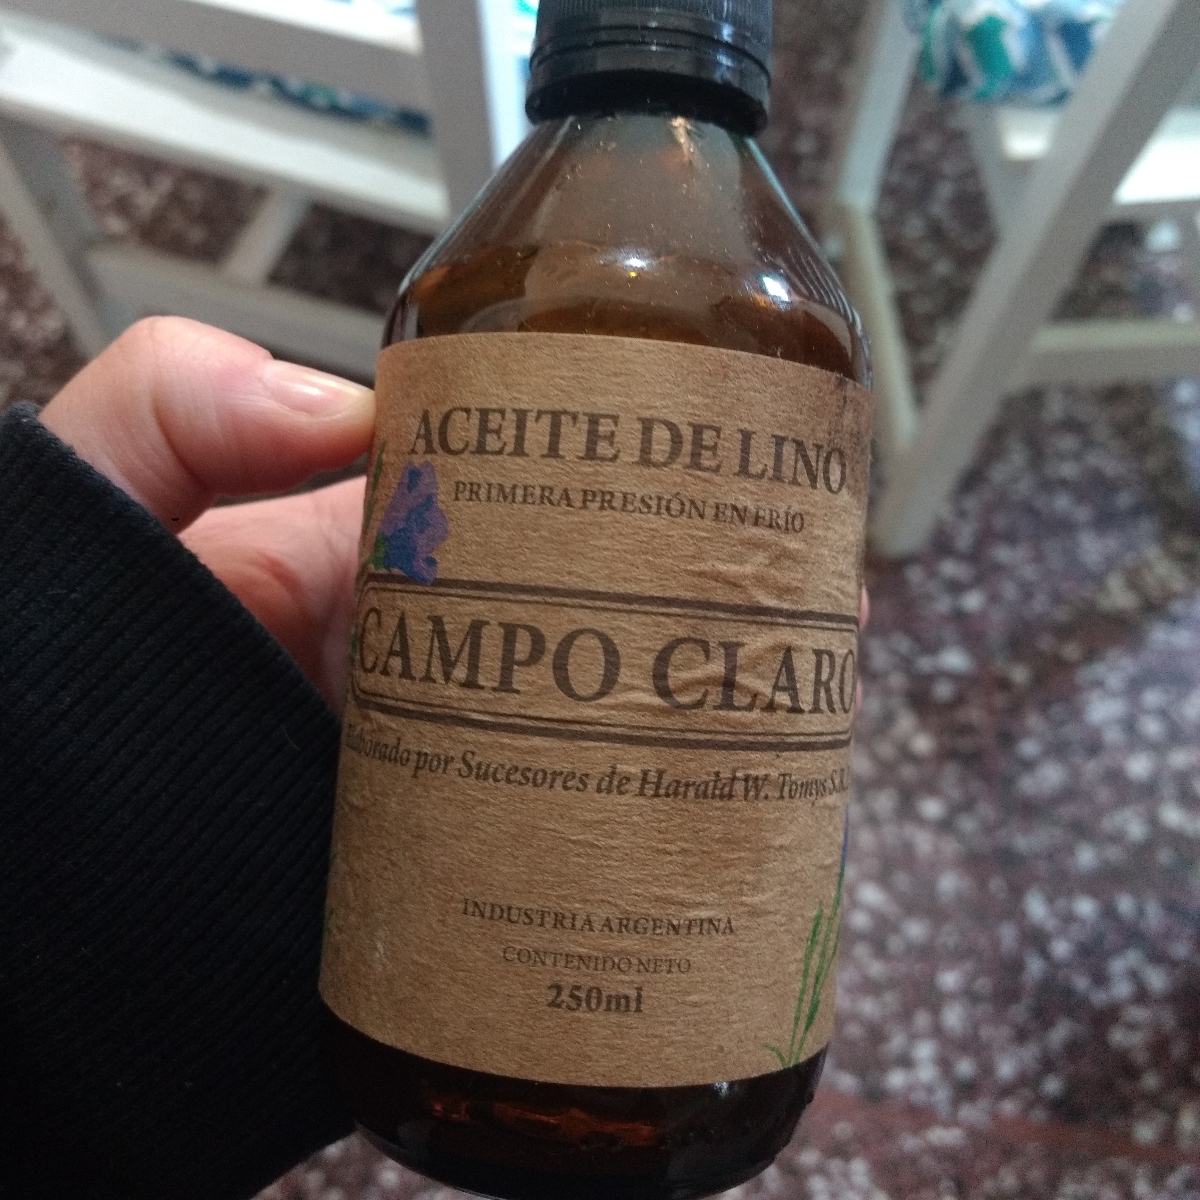 Campo Claro Aceite de Lino